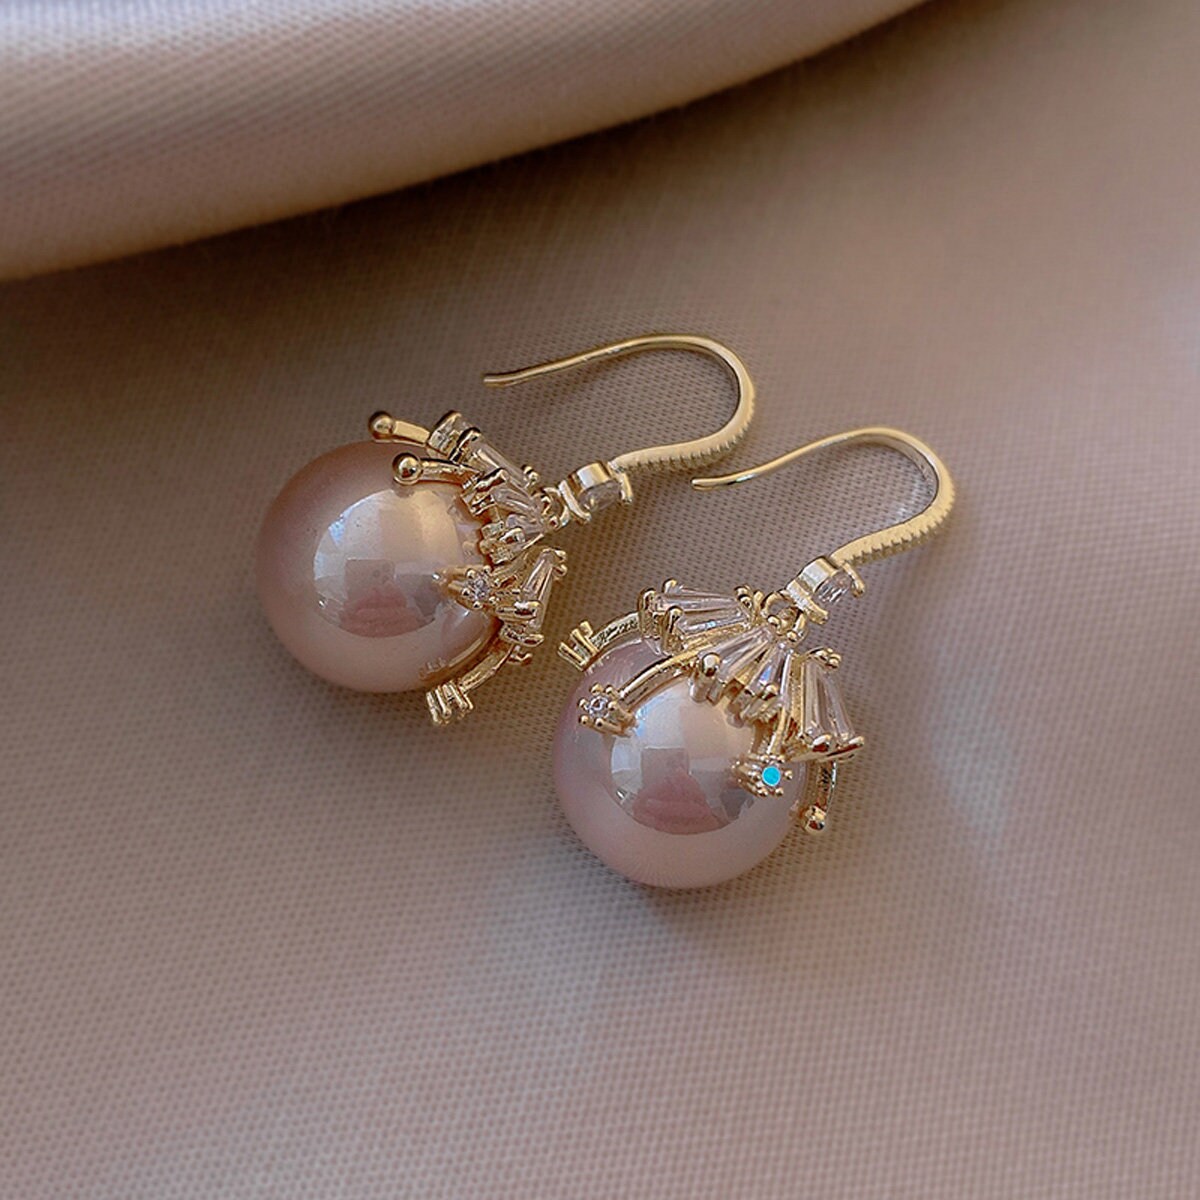 Bow Pearl Stud Earrings Bridesmaids Gift Cute Elegant Jewelry for Women  Silver Needle Minimalist Earrings 